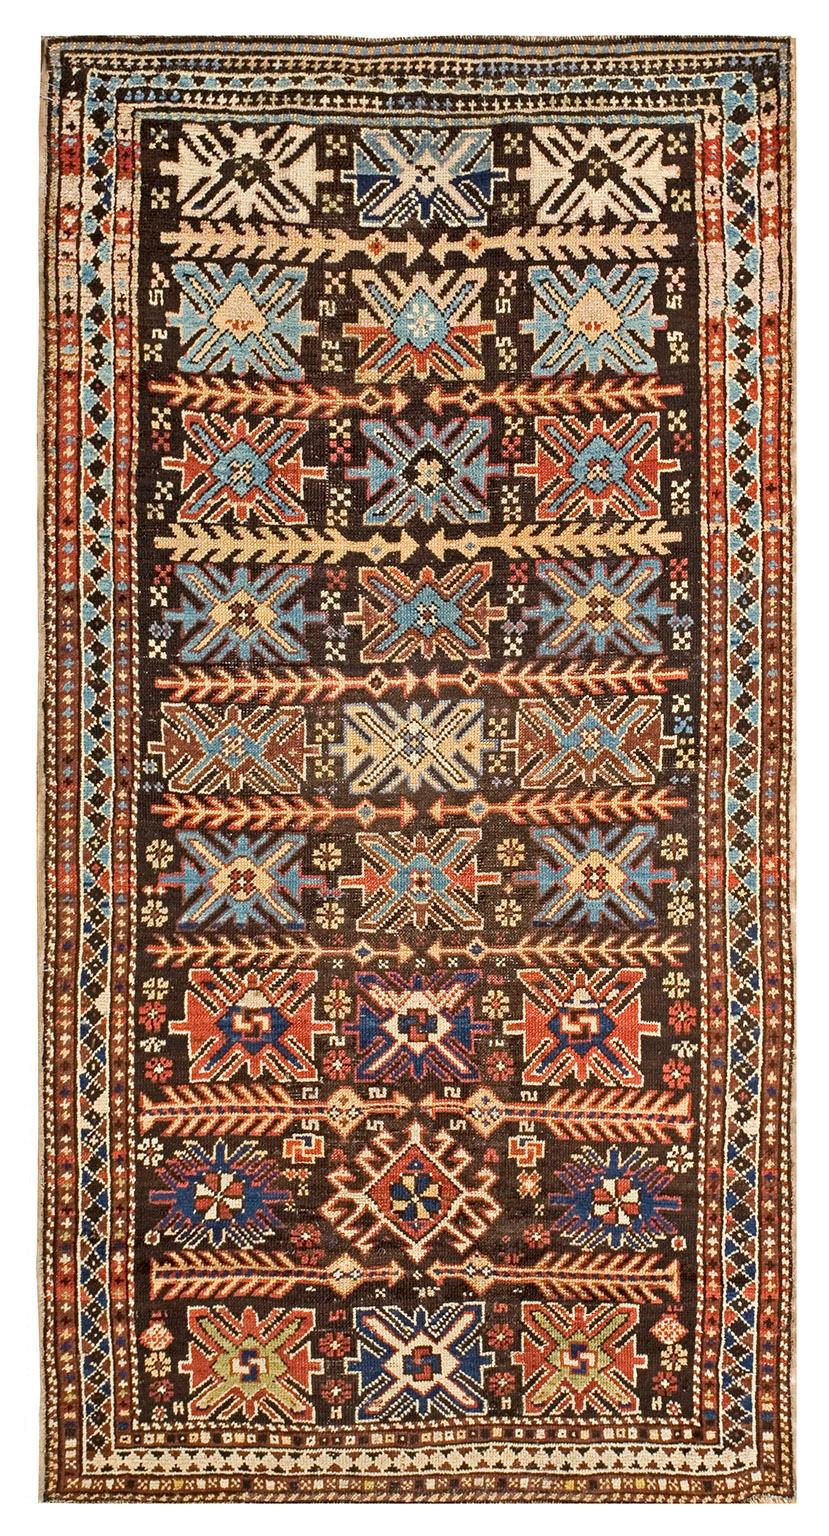 Early 20th Century Caucasian Karabagh Carpet ( 3'4